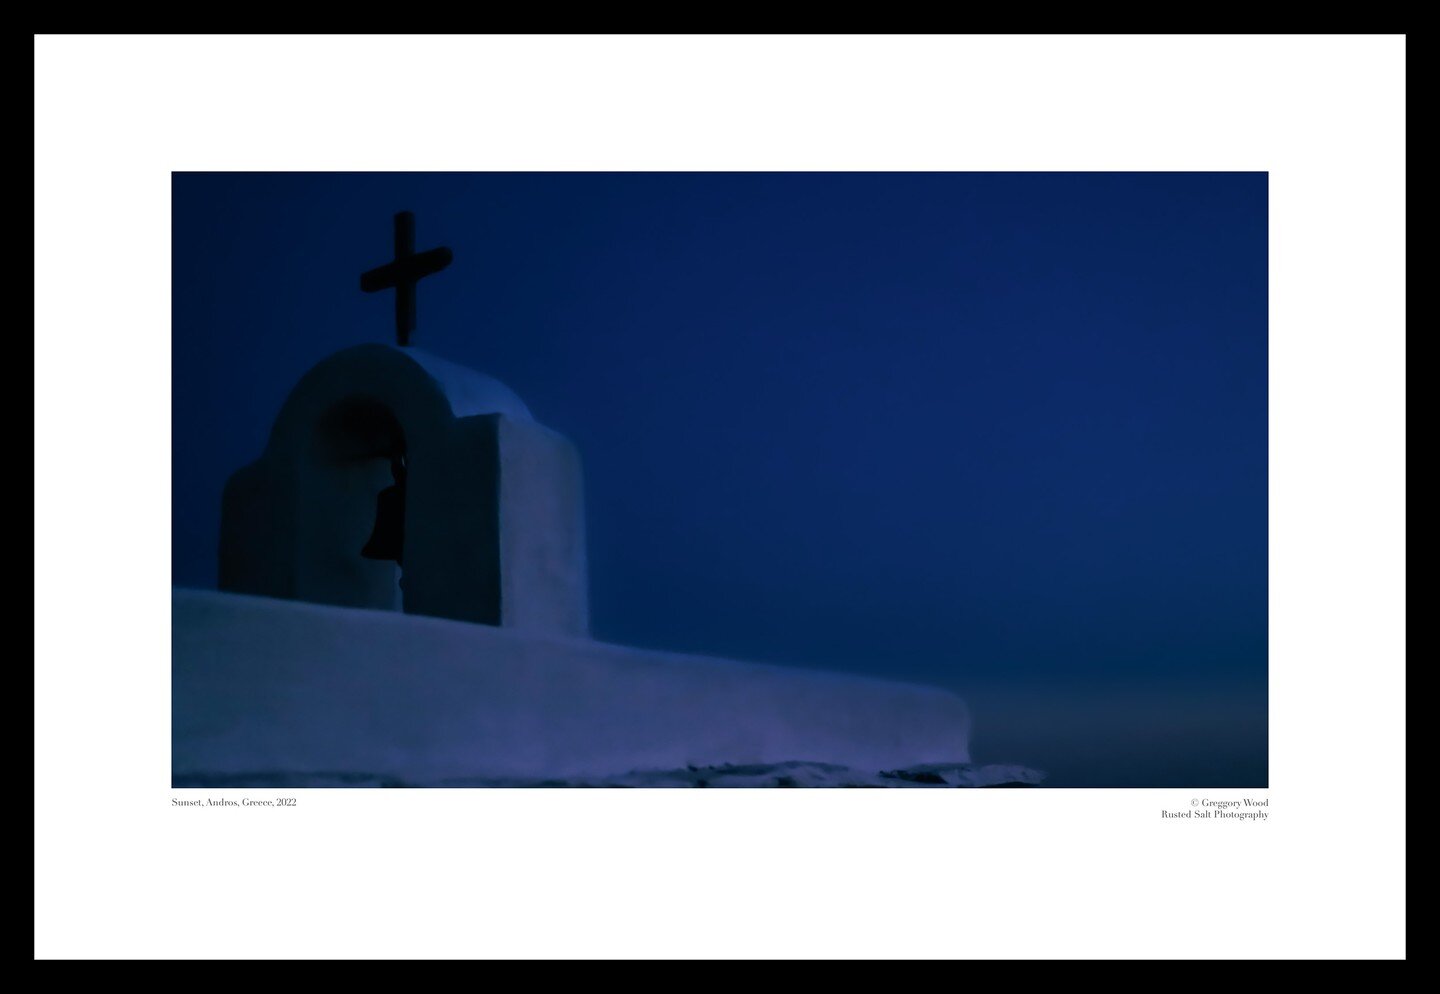 Sunset, Andros, Greece, 2022
#rustedsaltphotography #leicaphotography #leicatl2 #lfigallery #greece #andros #utahphotographer